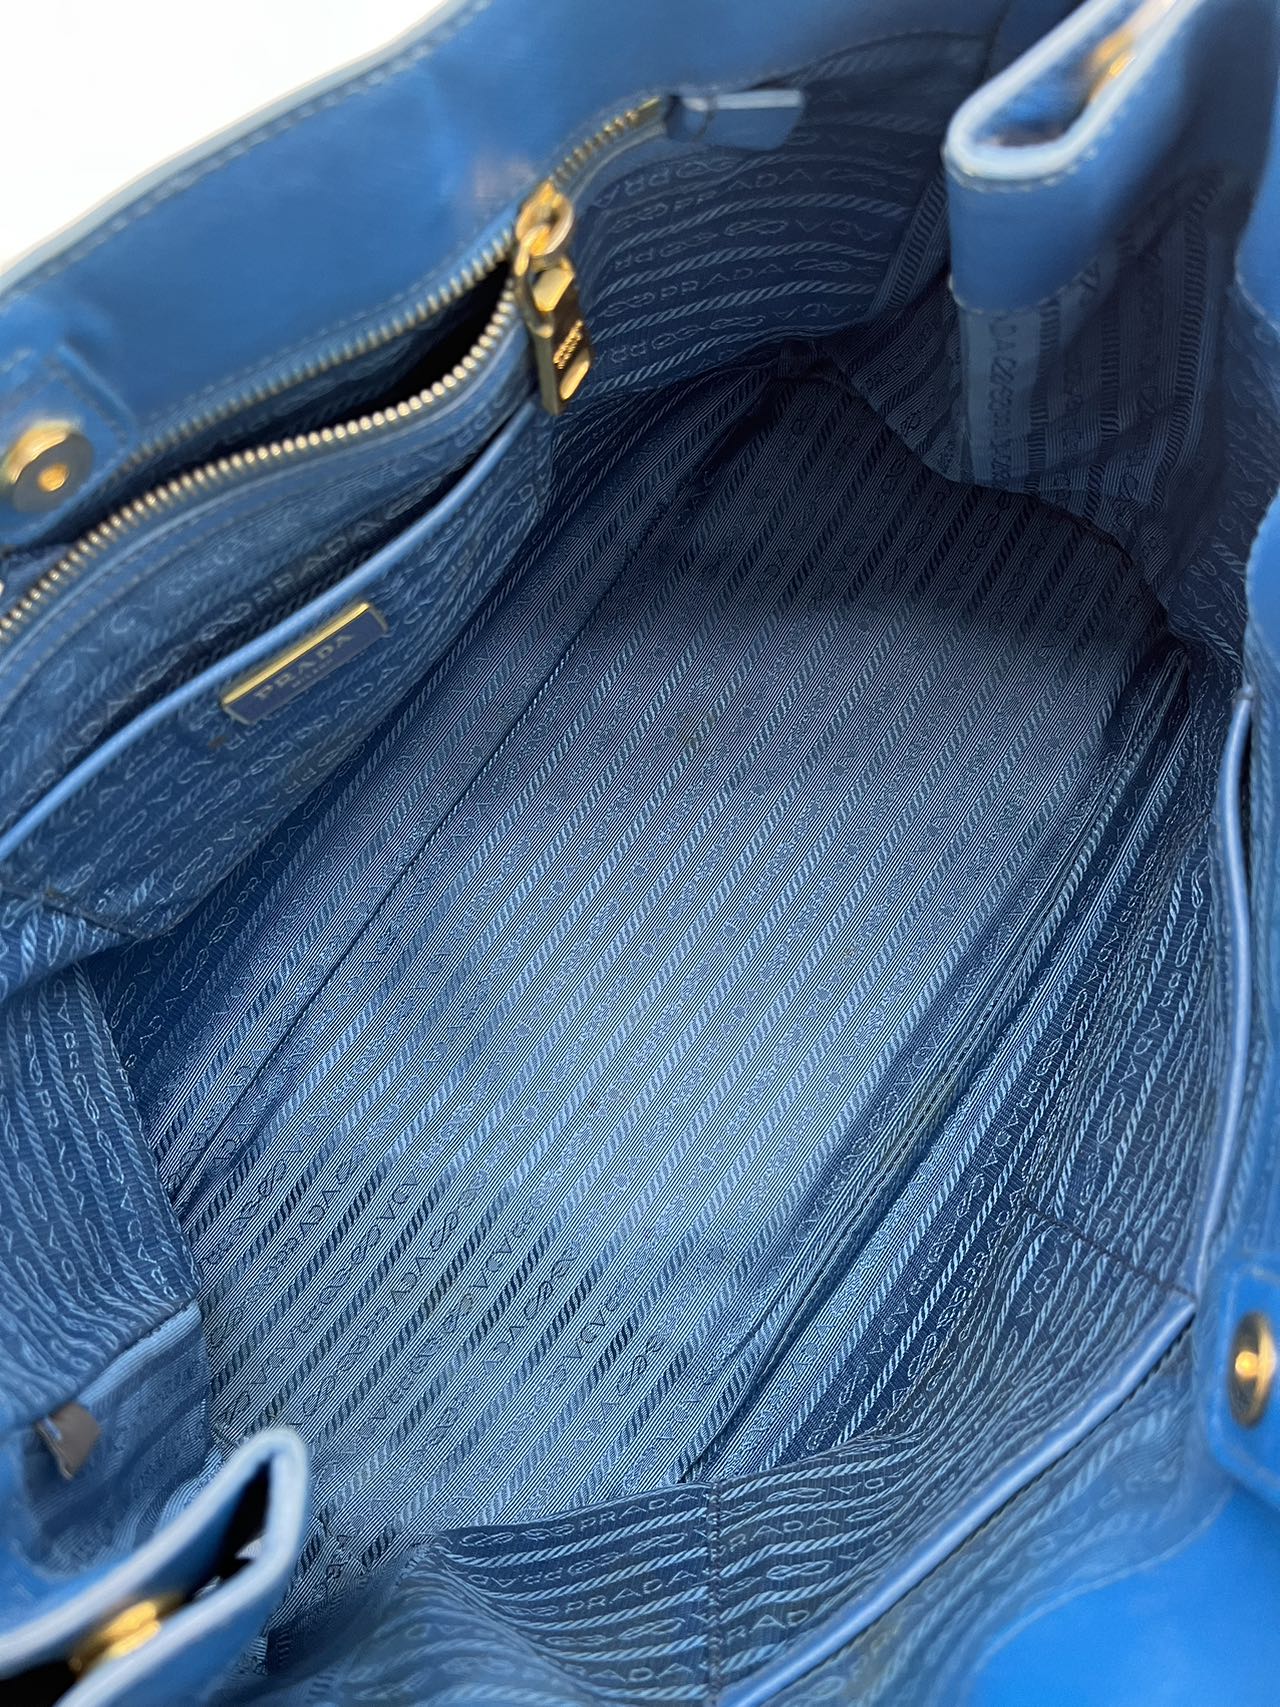 Preloved Prada Blue Lux Saffiano Large Satchel Handbag